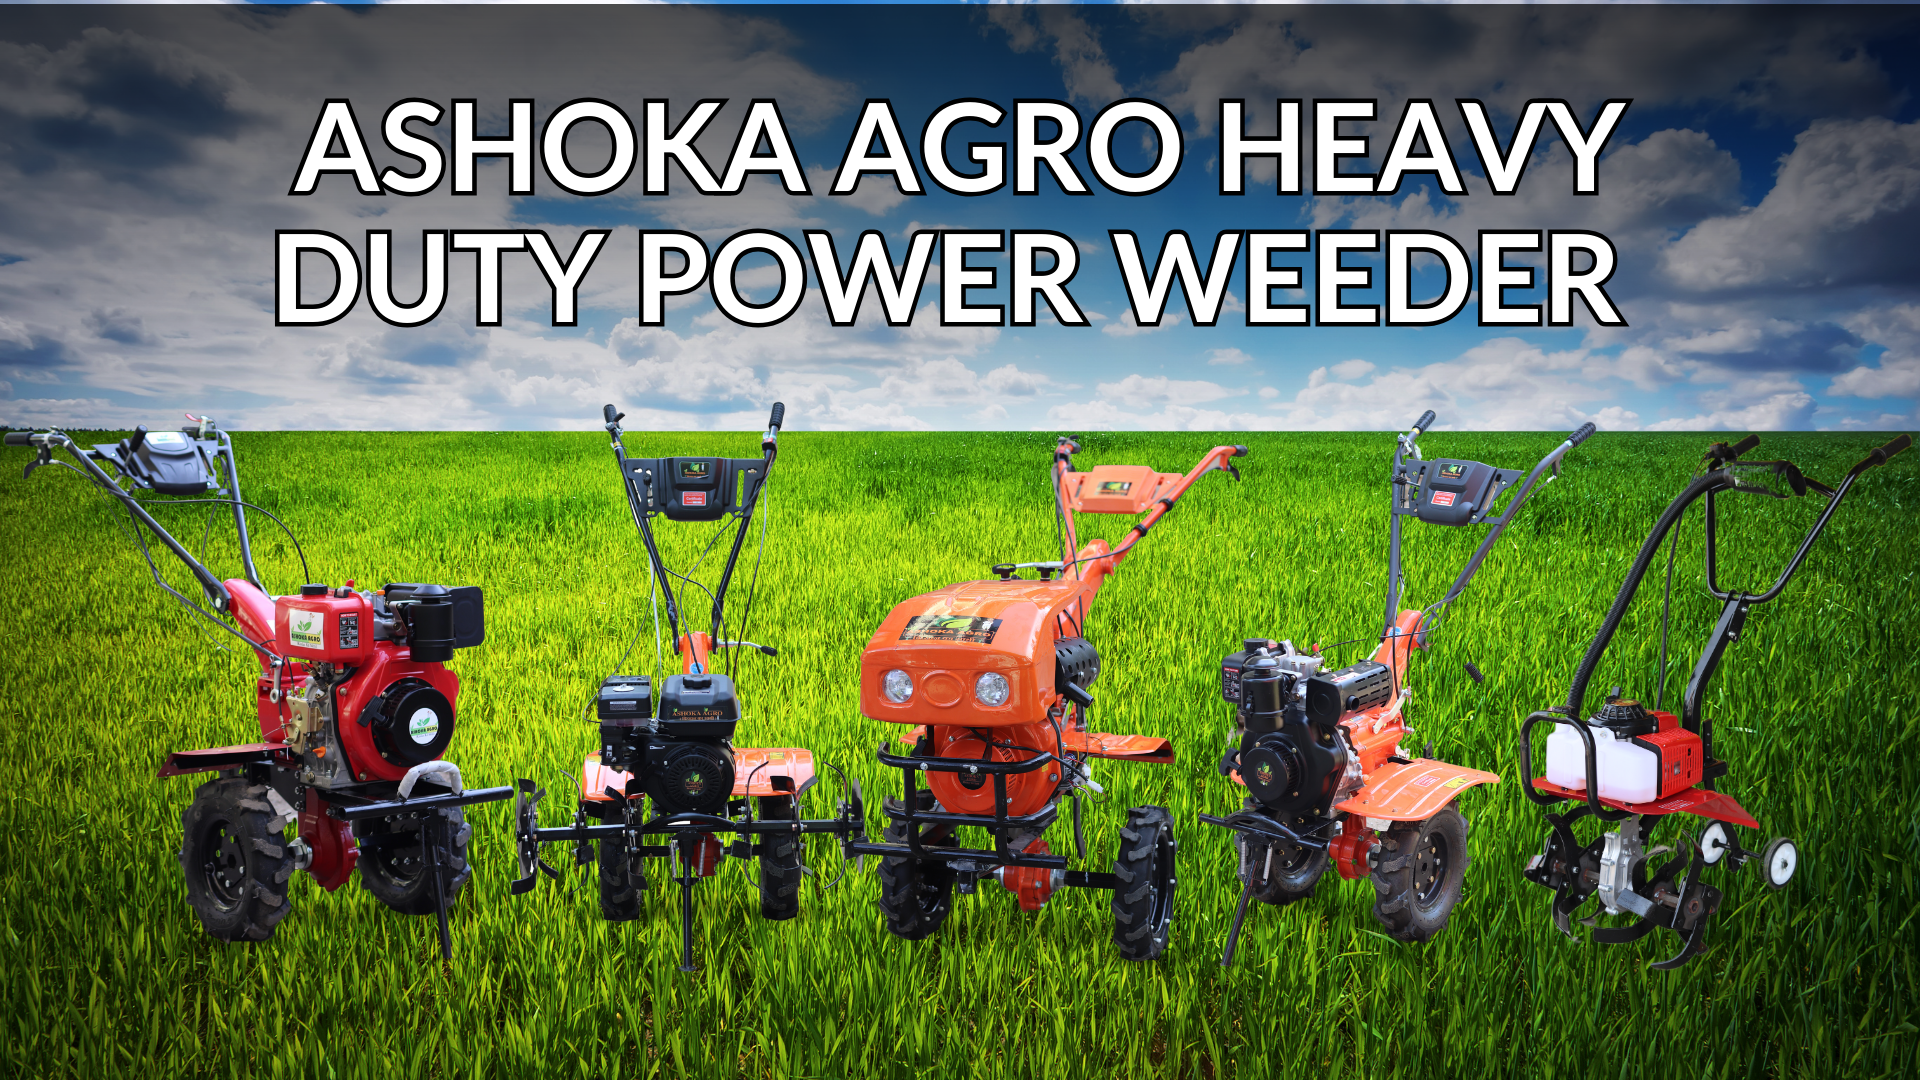 Ashoka Agro heavy Duty power weeder (1920 × 1080px)